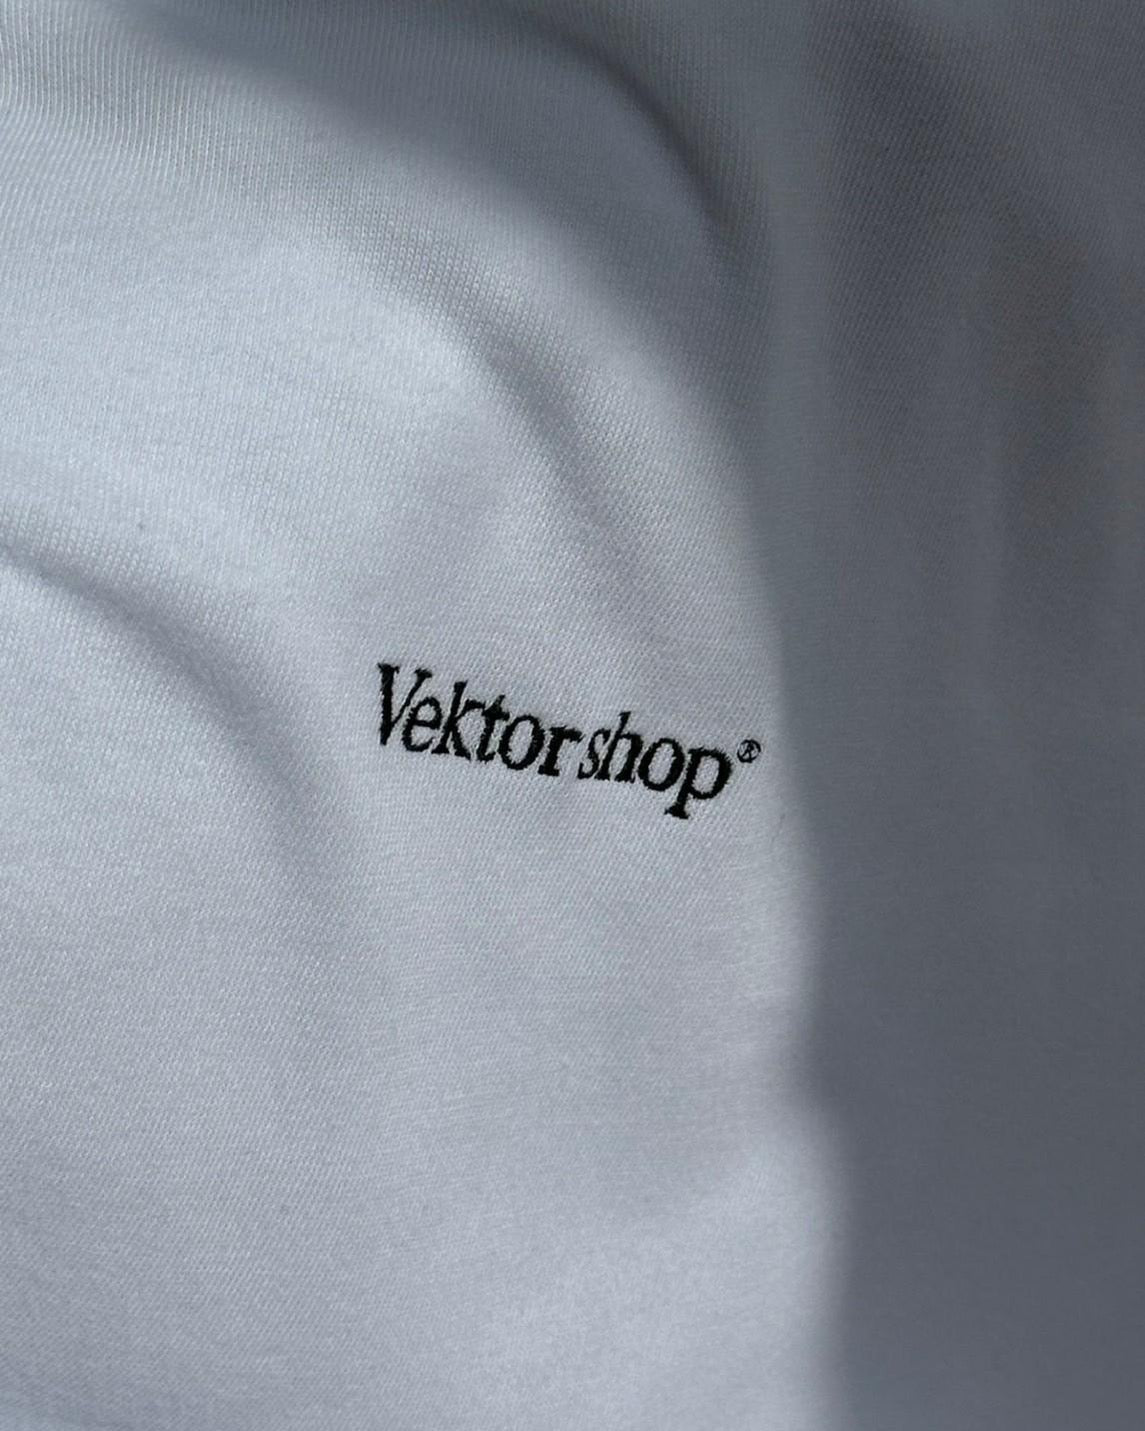 Vektor shop® / Vector shop S/S Tee w/Print "City Music Tokyo"